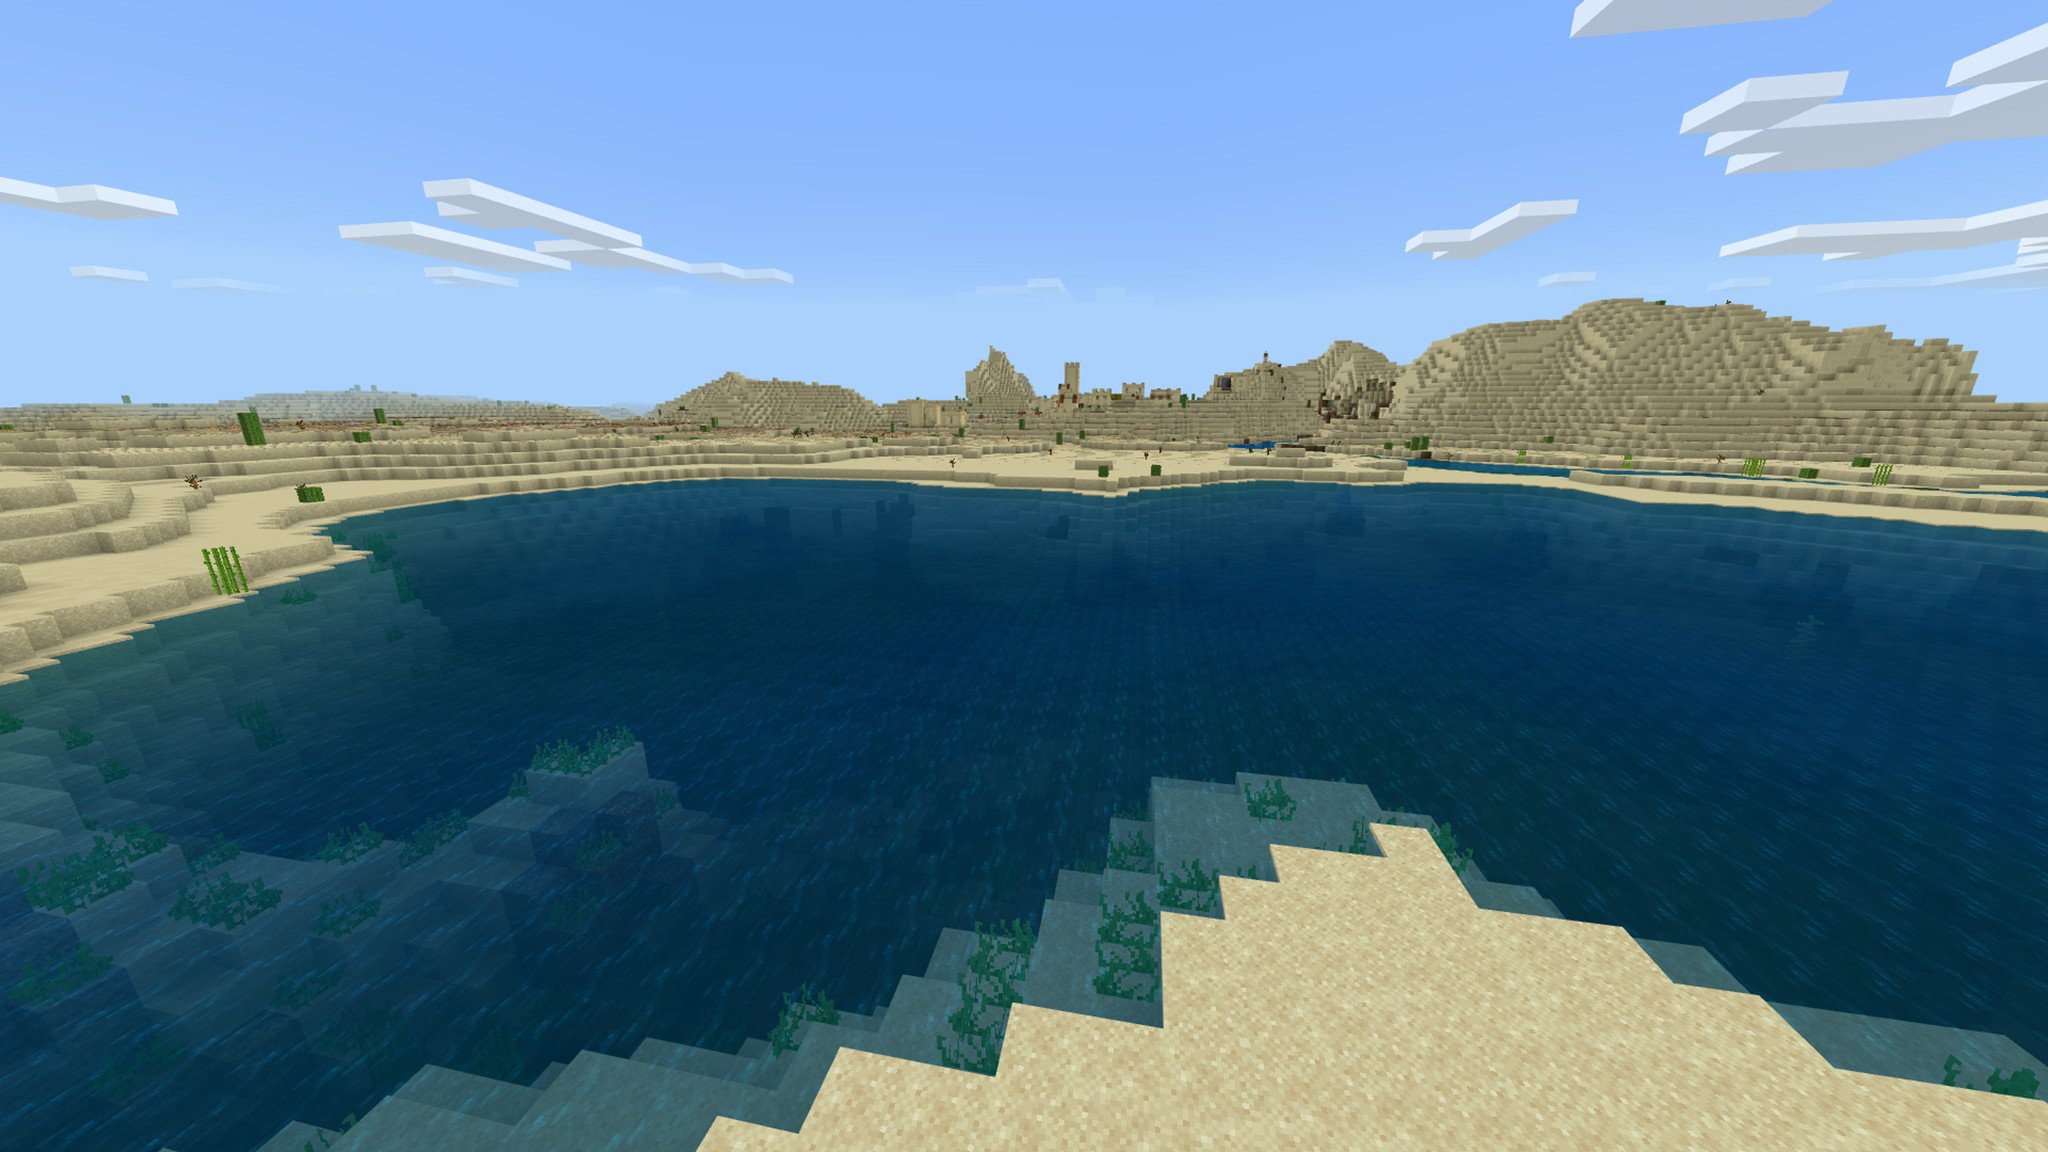 I found a lake